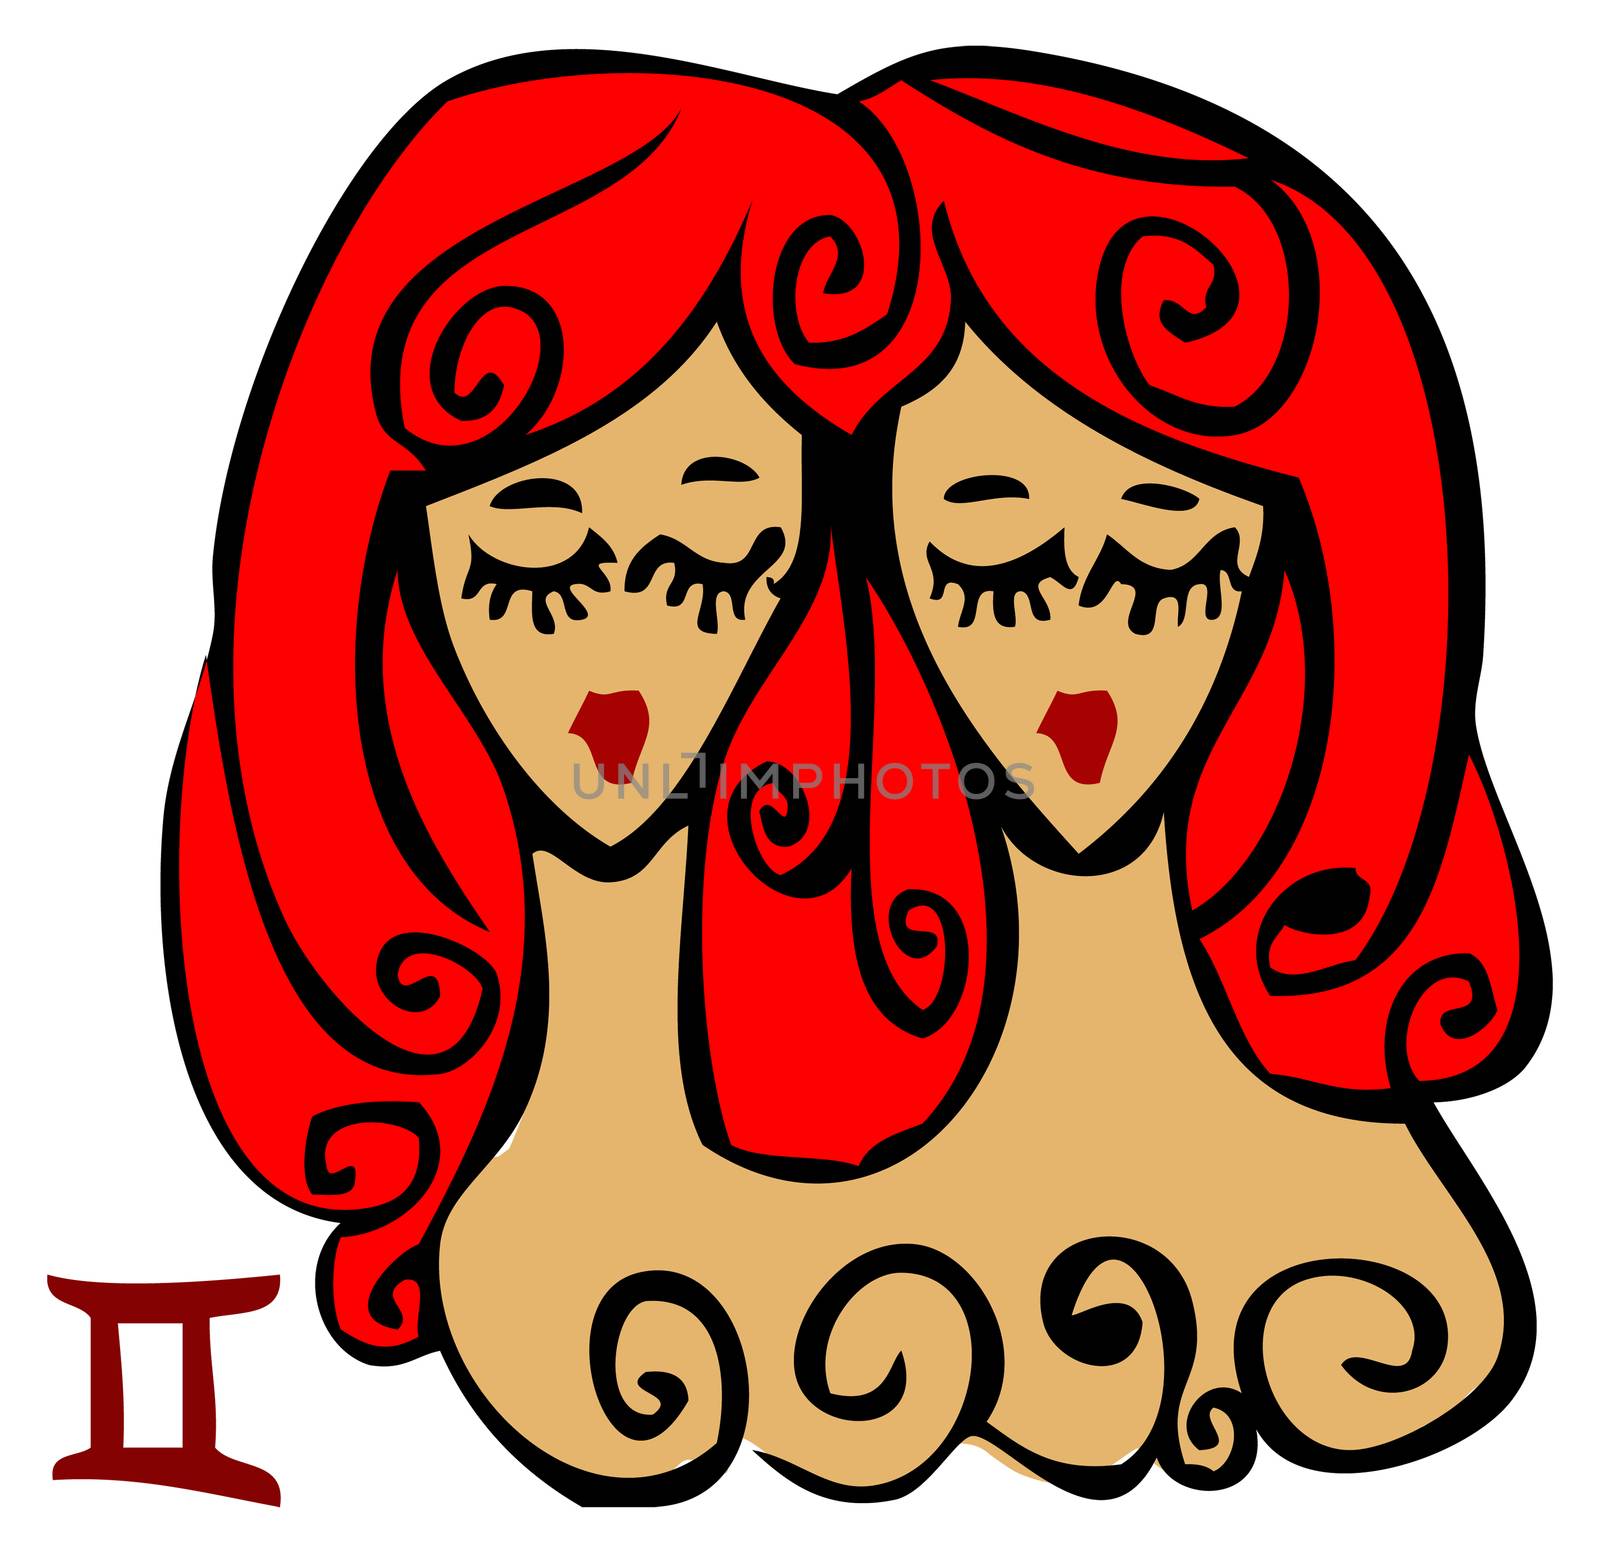 Zodiac signs, icons - gemini, Beauty Woman symbol by IconsJewelry